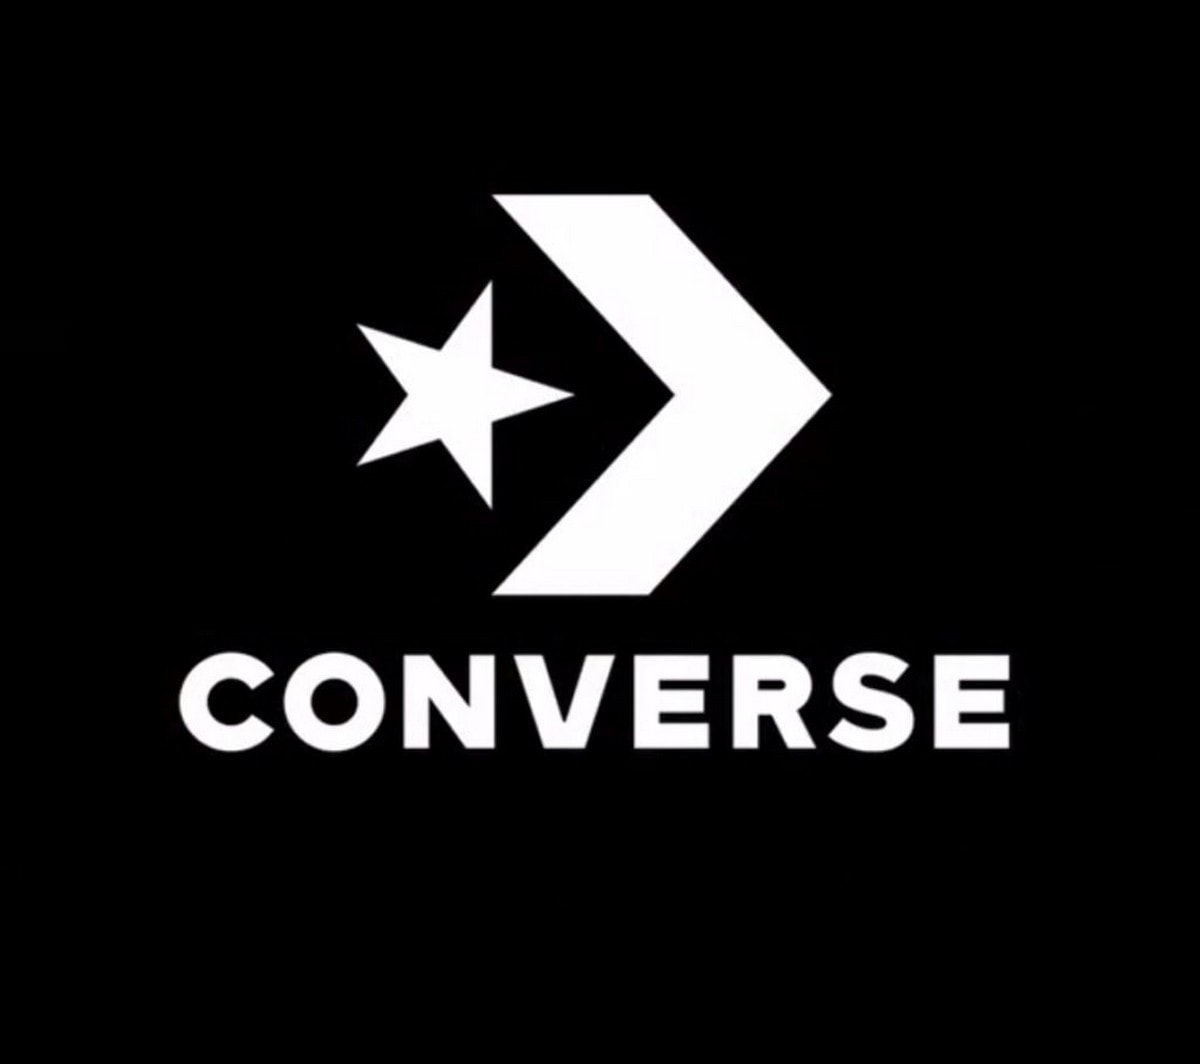 converse brand image